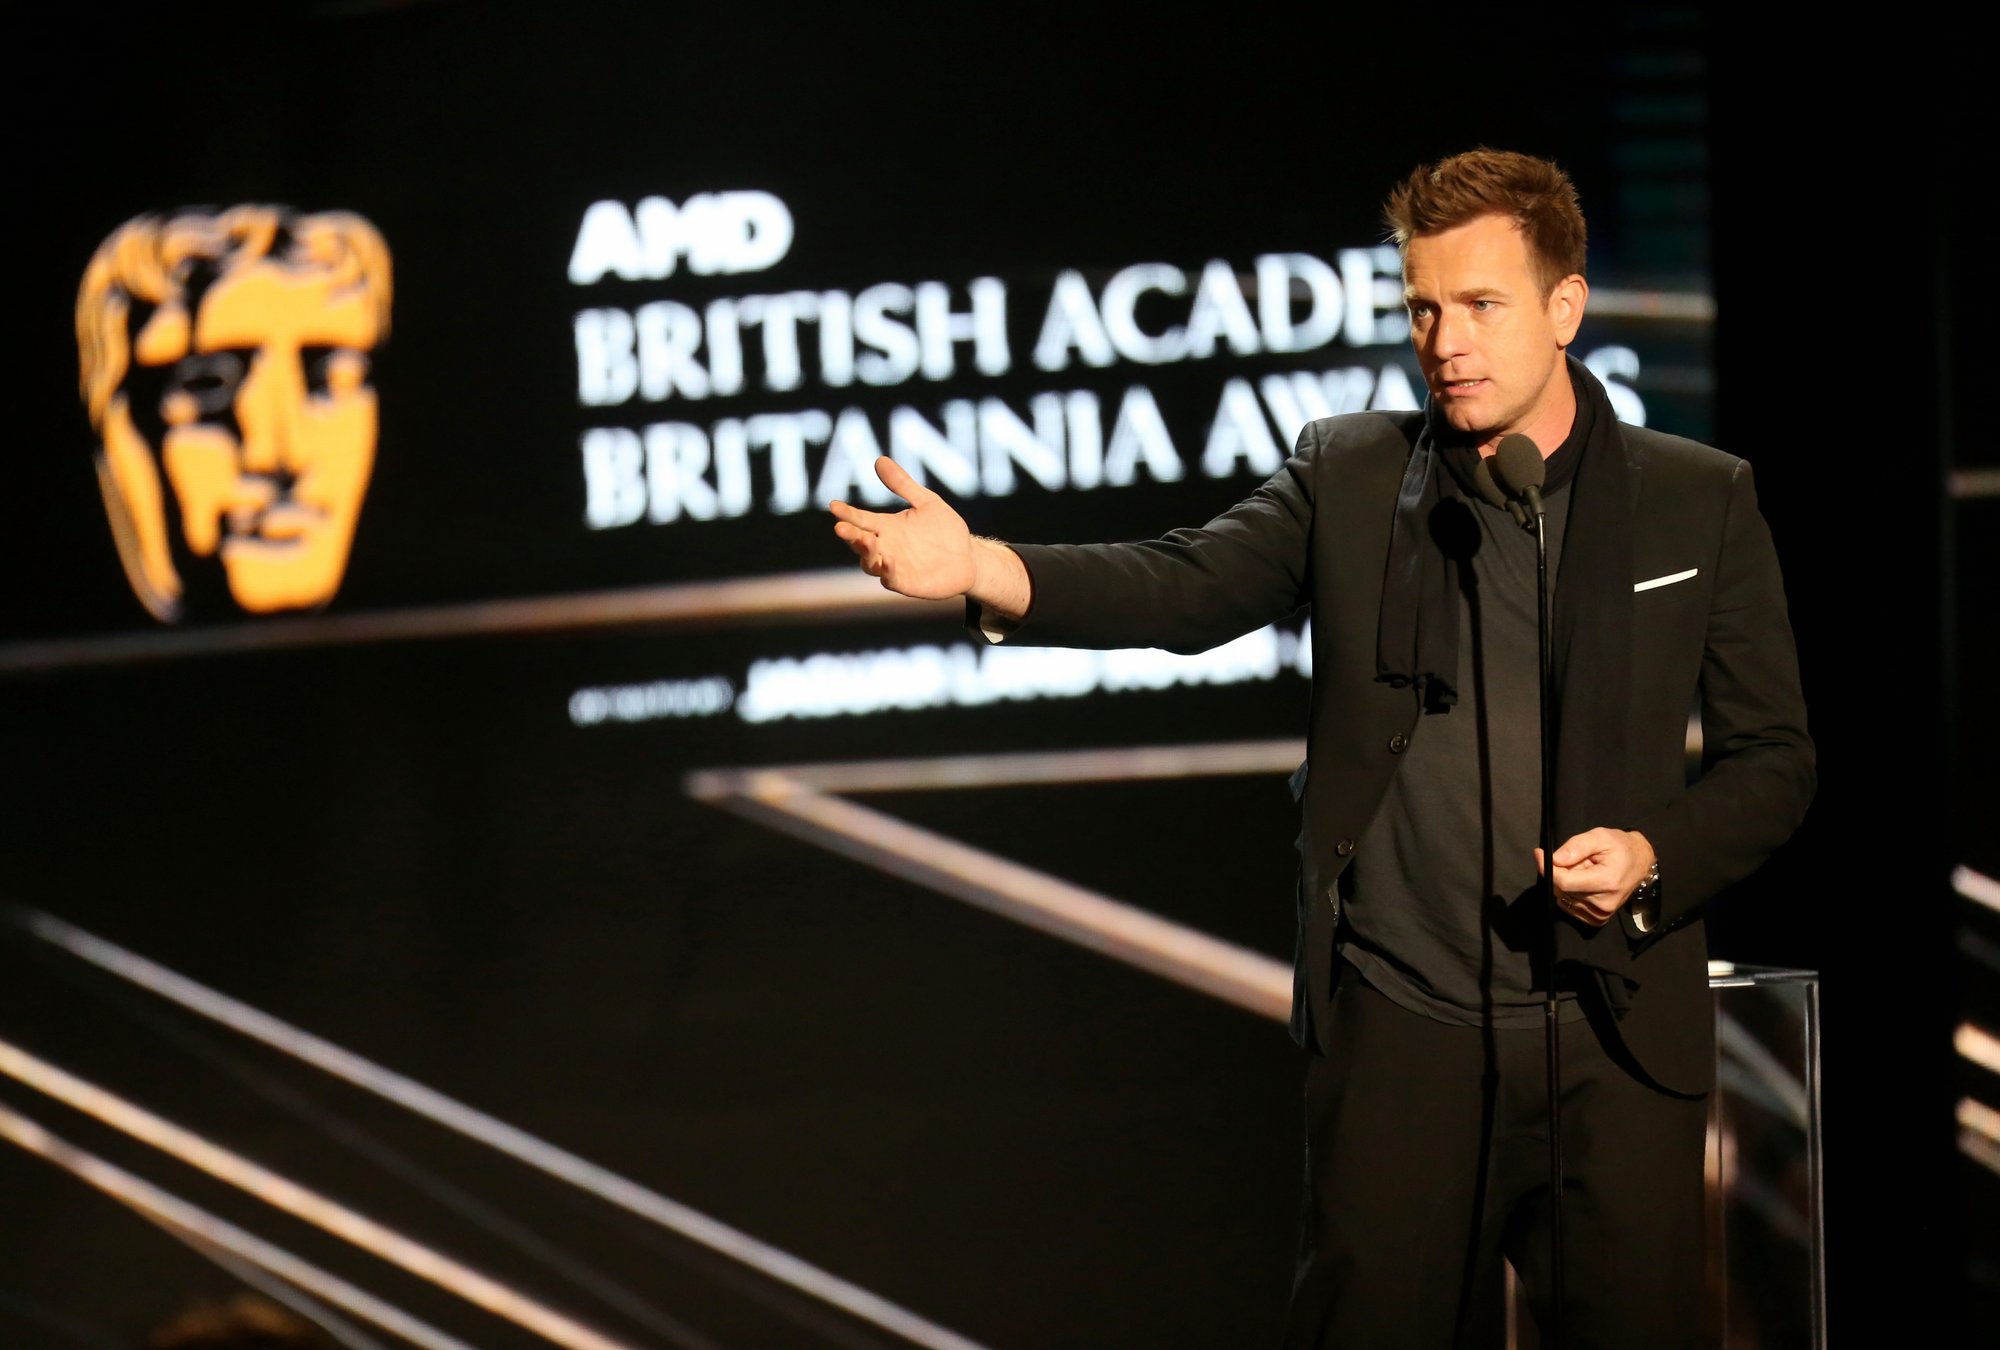 2016-10-28-AMD-British-Academy-Britannia-Awards-058.jpg